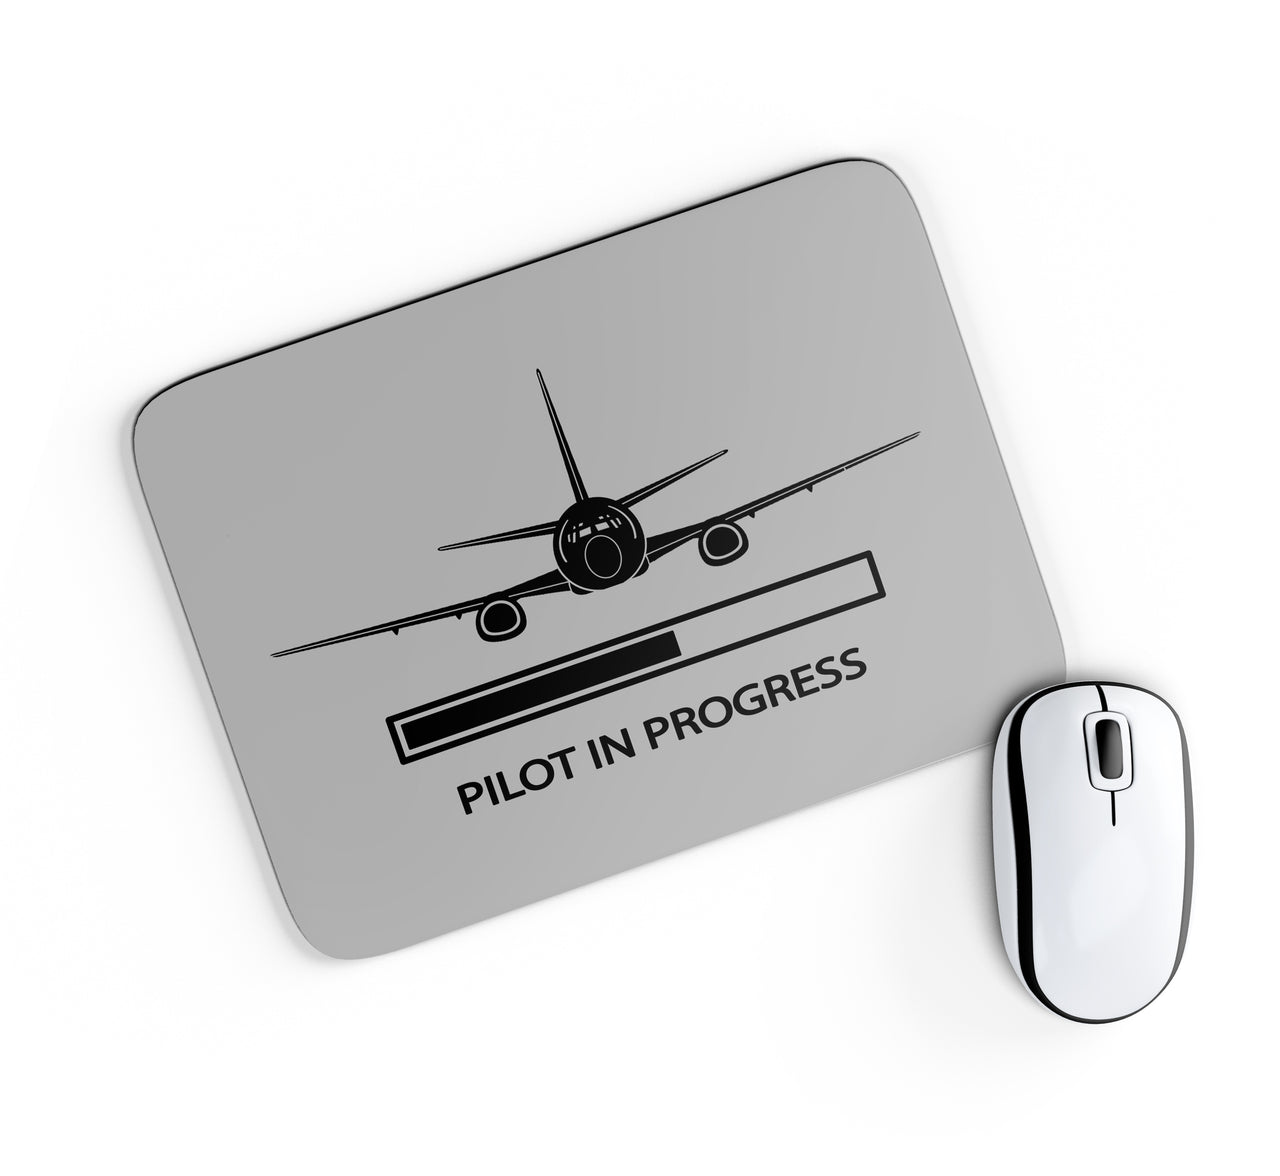 Pilot In Progress Designed Mouse Pads